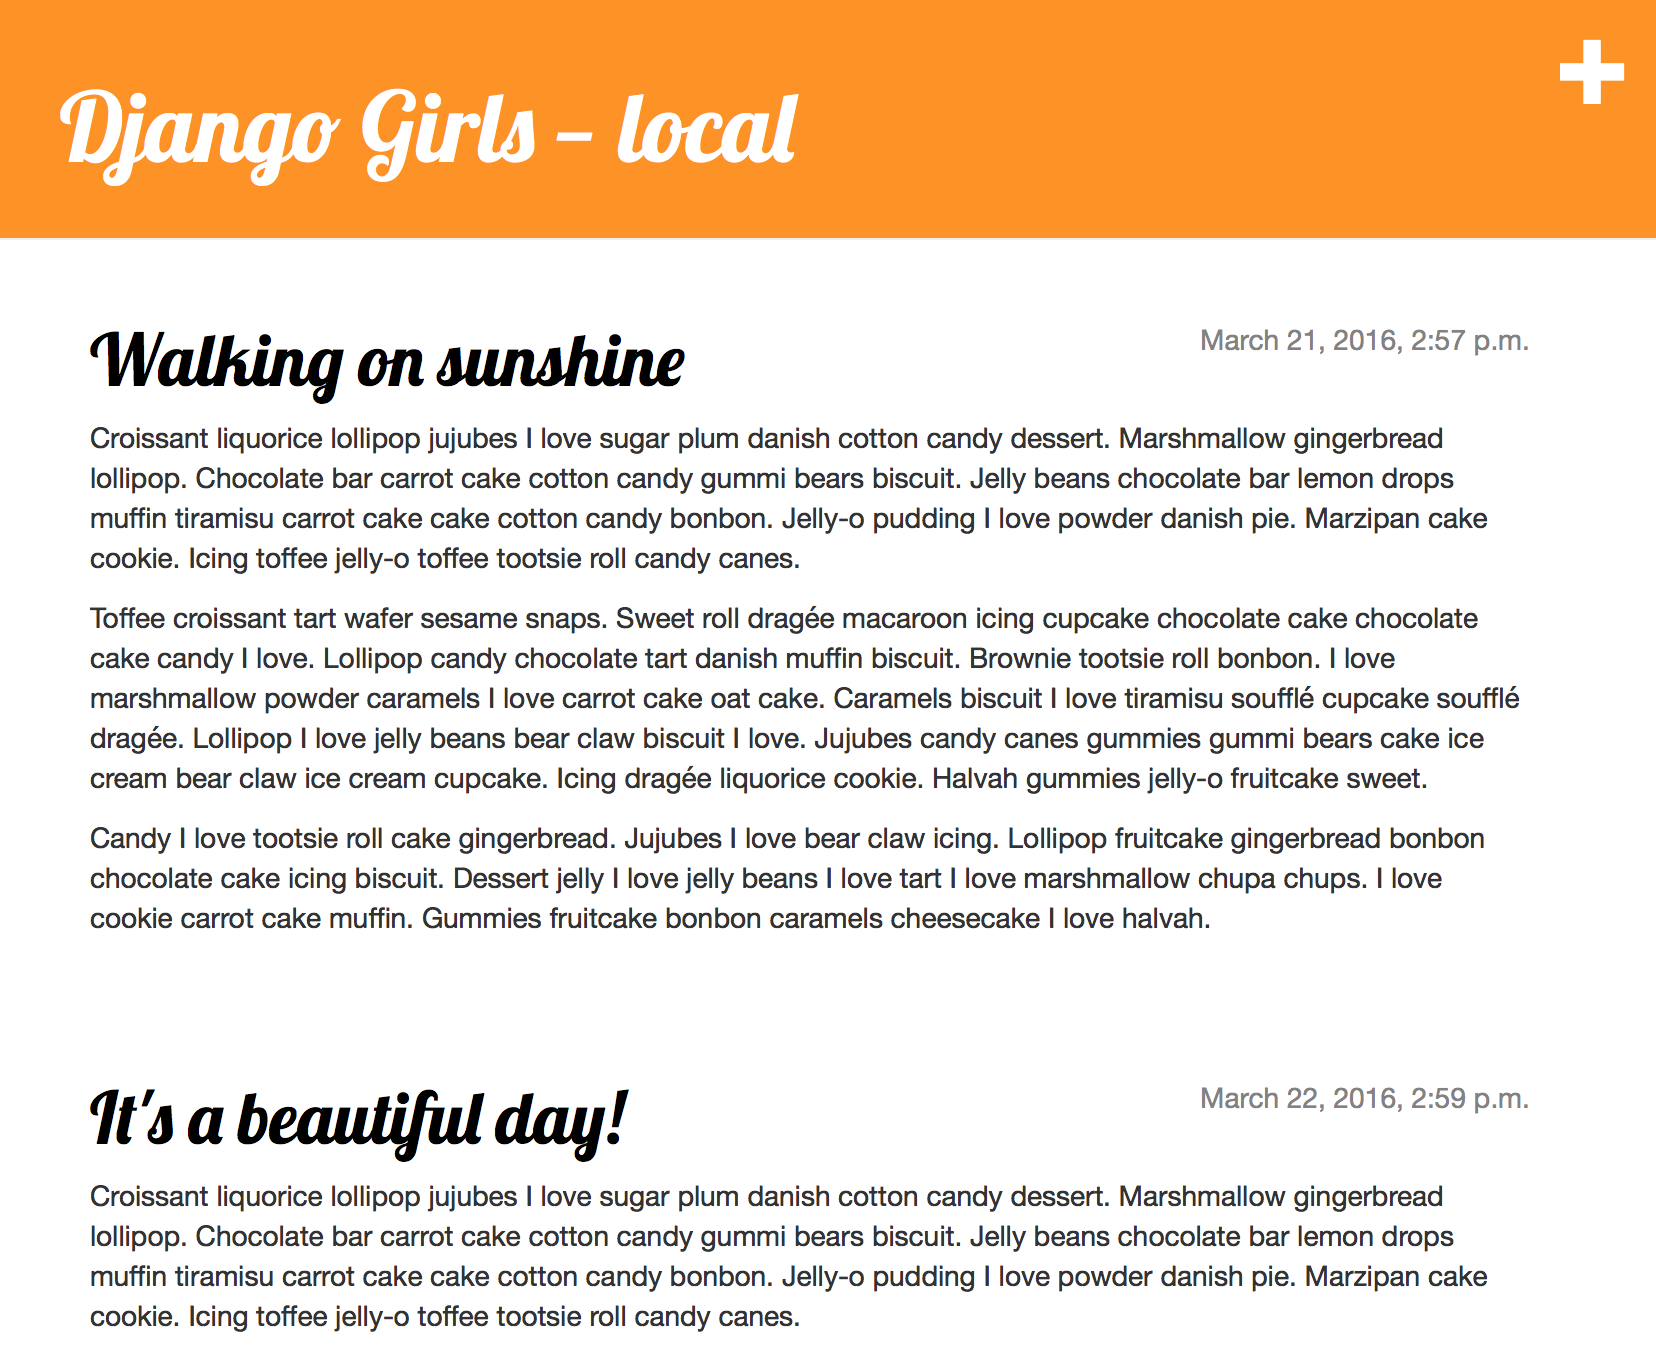 Sample blog app following the Django Girls Tutorial.